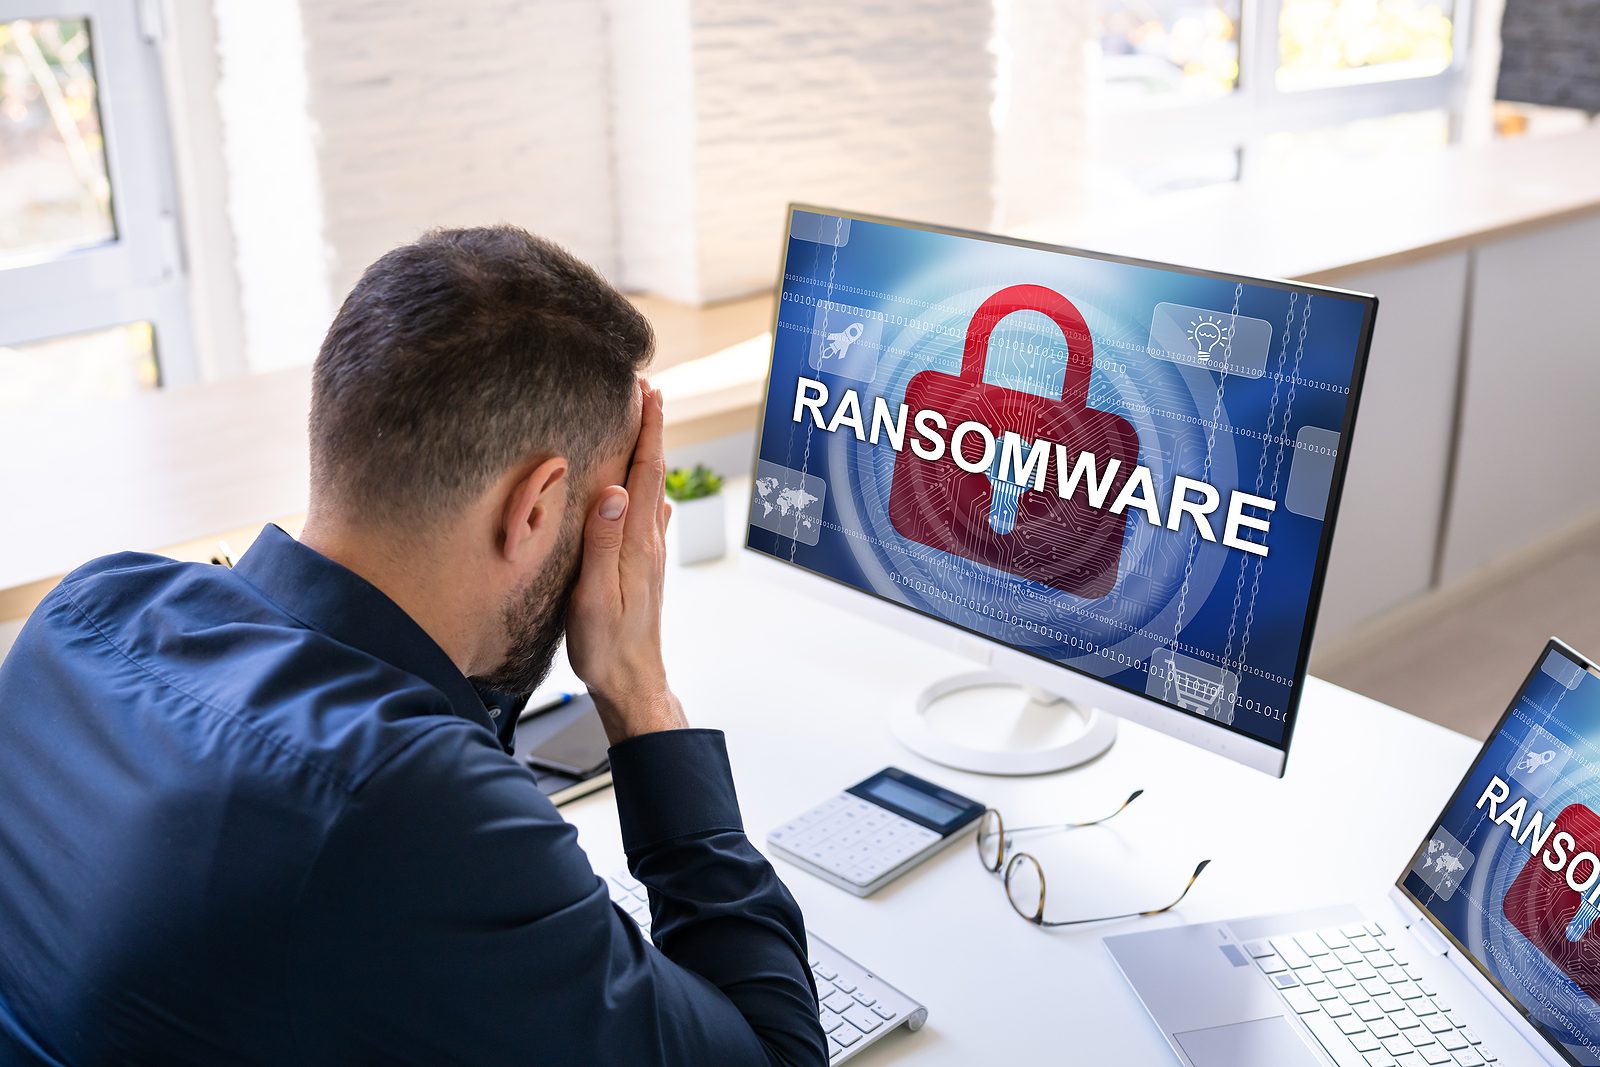 Microsoft: Cl0p Ransomware Exploited PaperCut Vulnerabilities Since April 13 – Source: www.securityweek.com